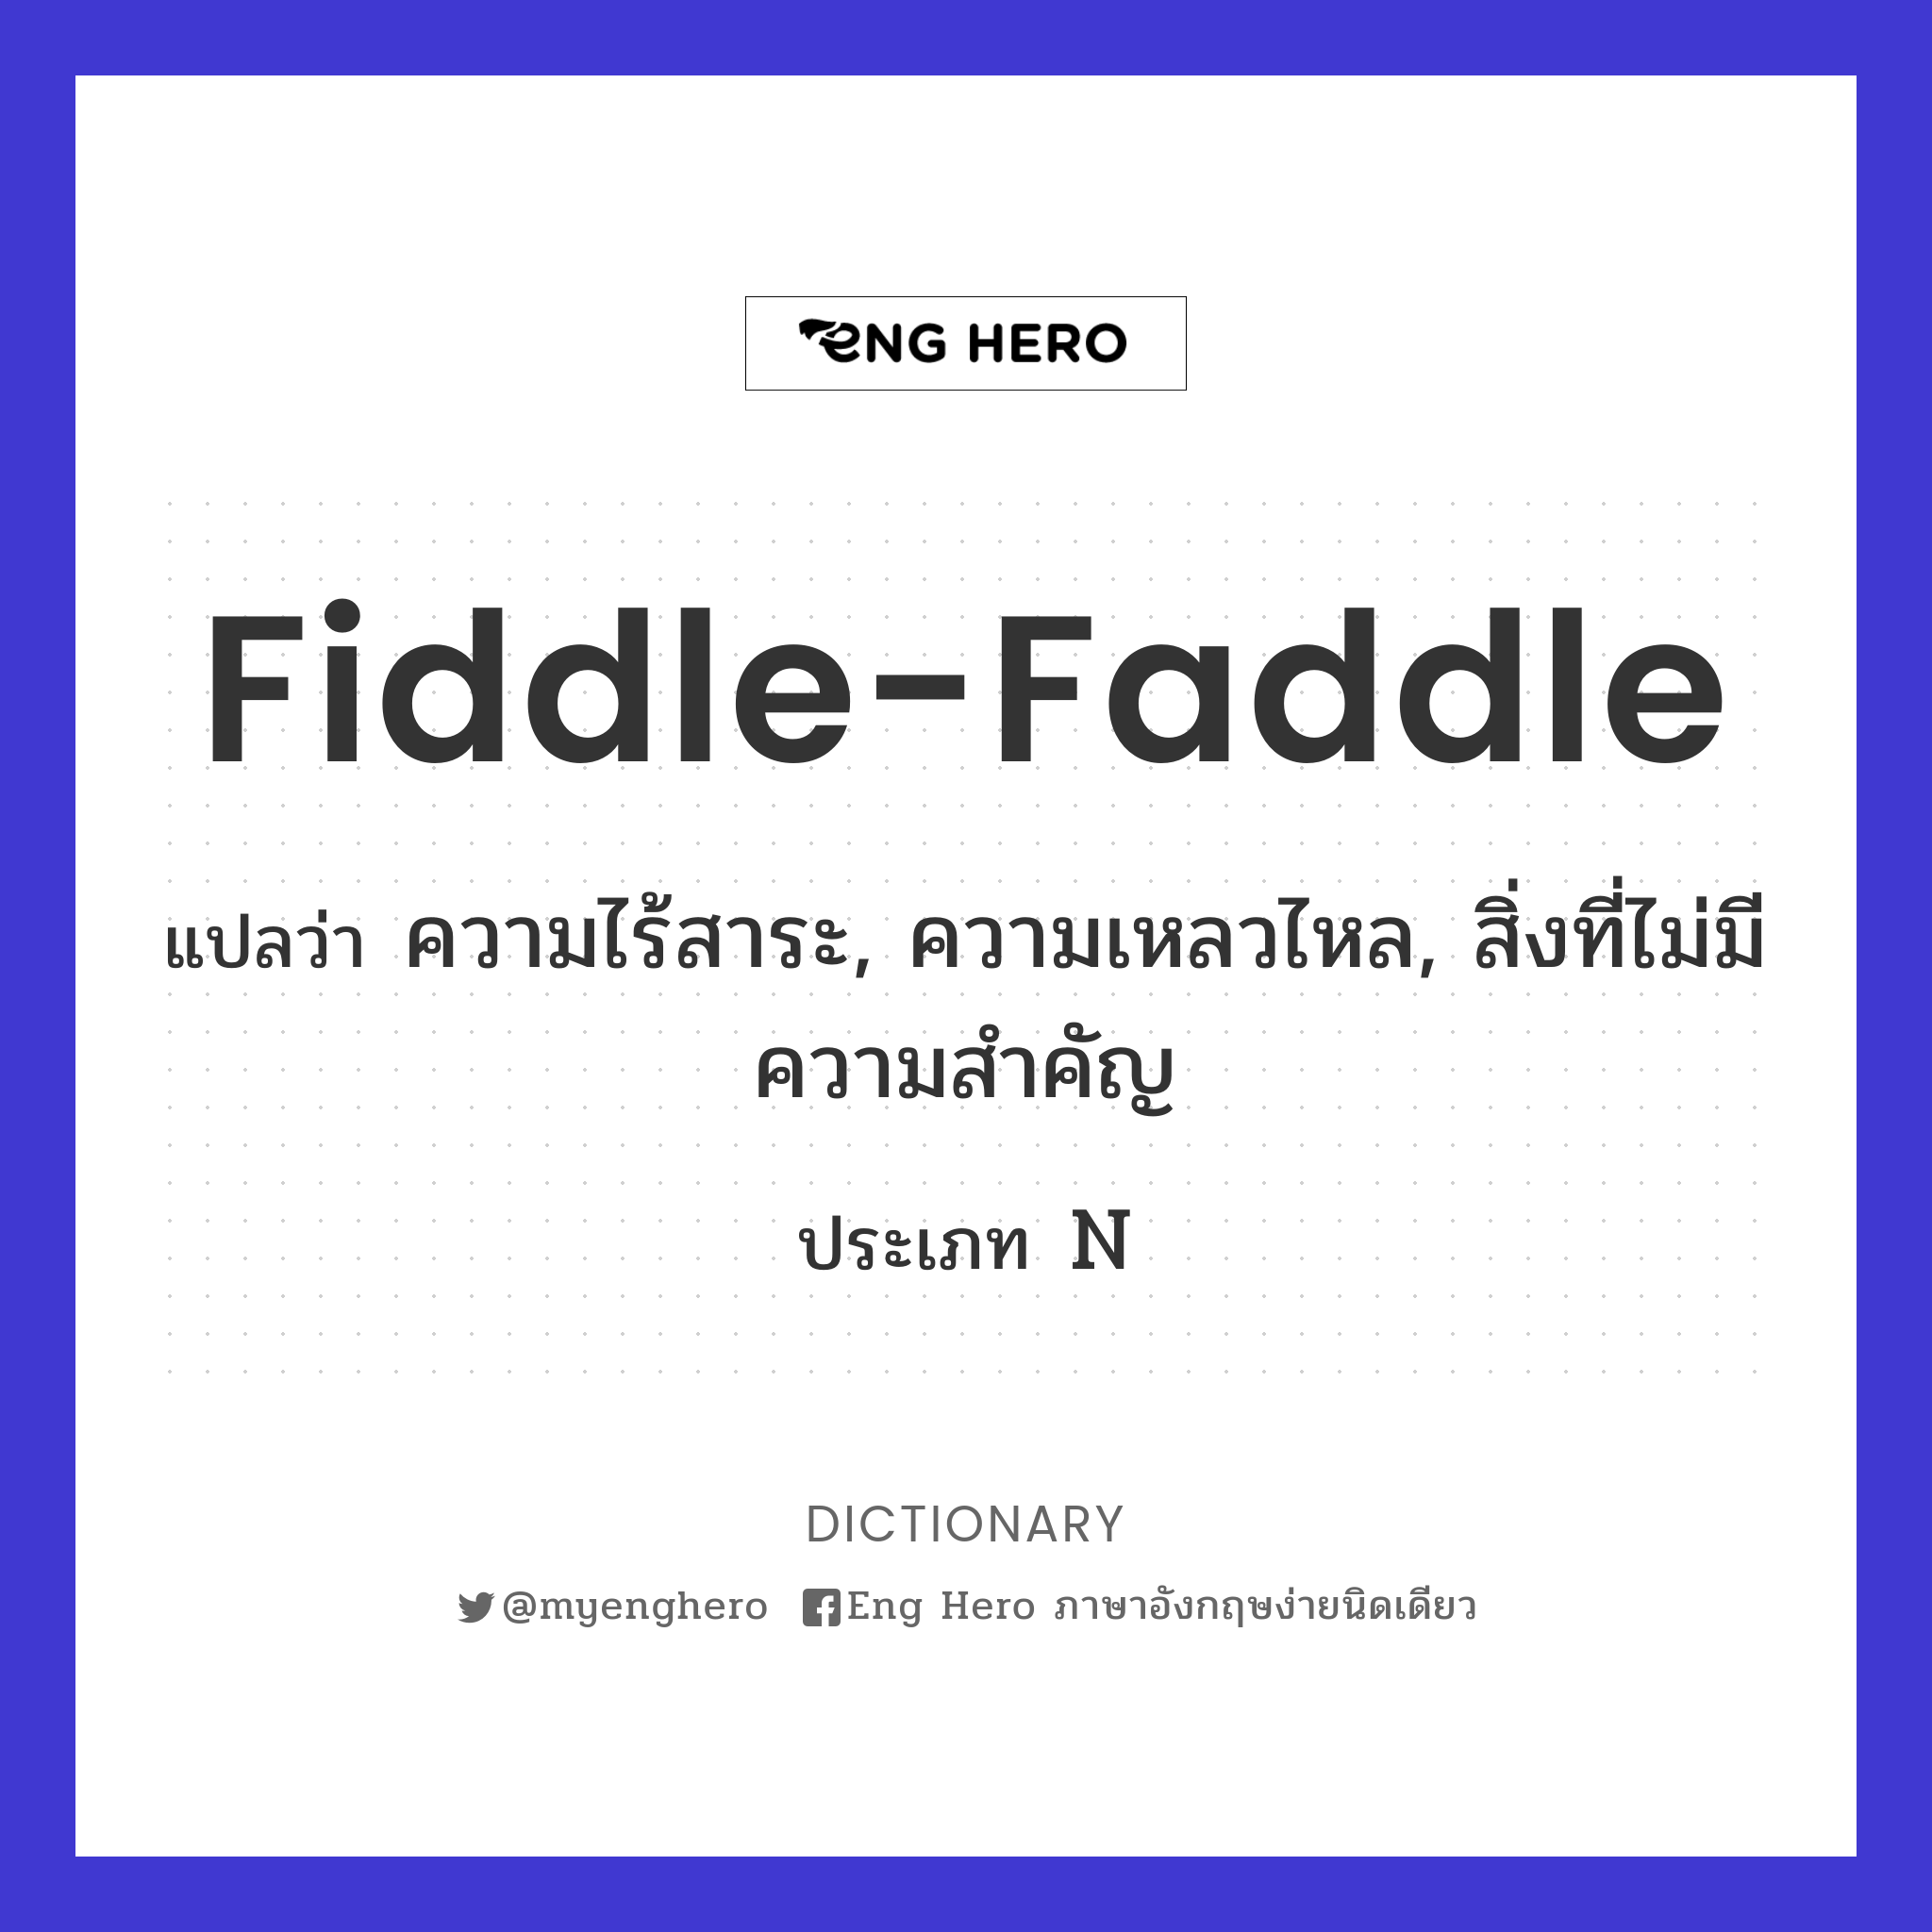 fiddle-faddle